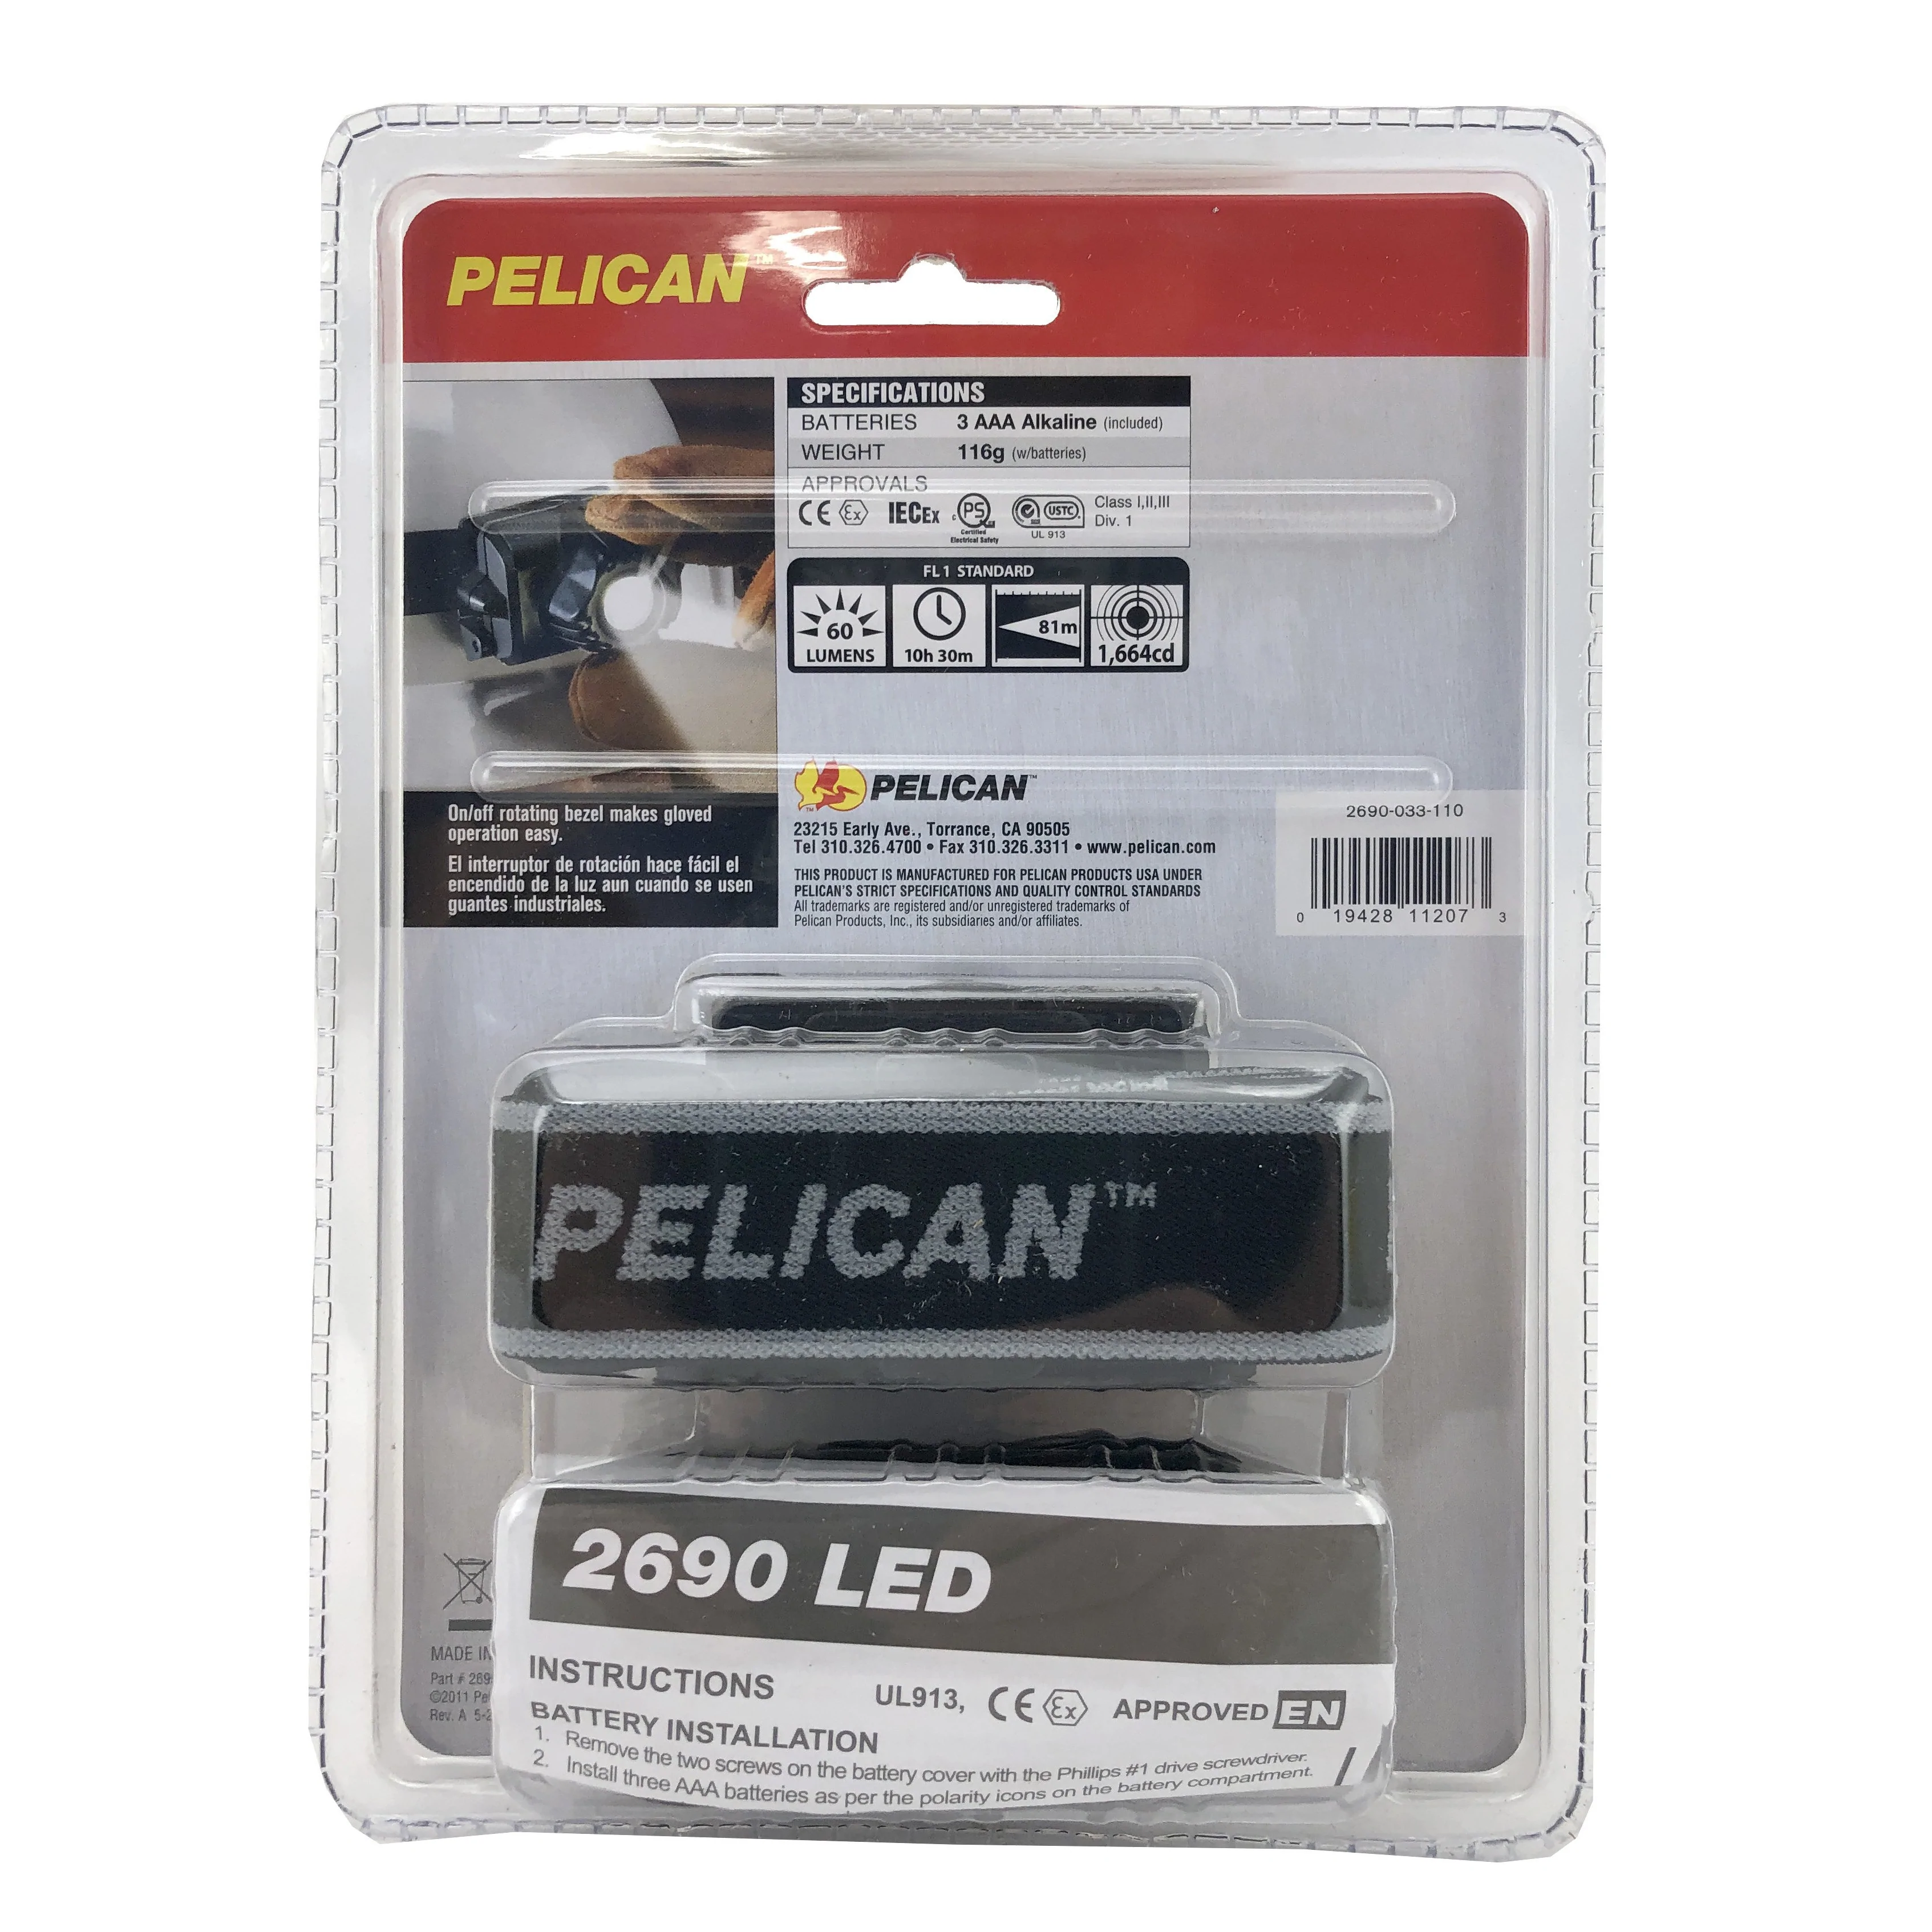 Pelican 2690 LED Headlight | Lightweight | Super Bright LED | Headlamp